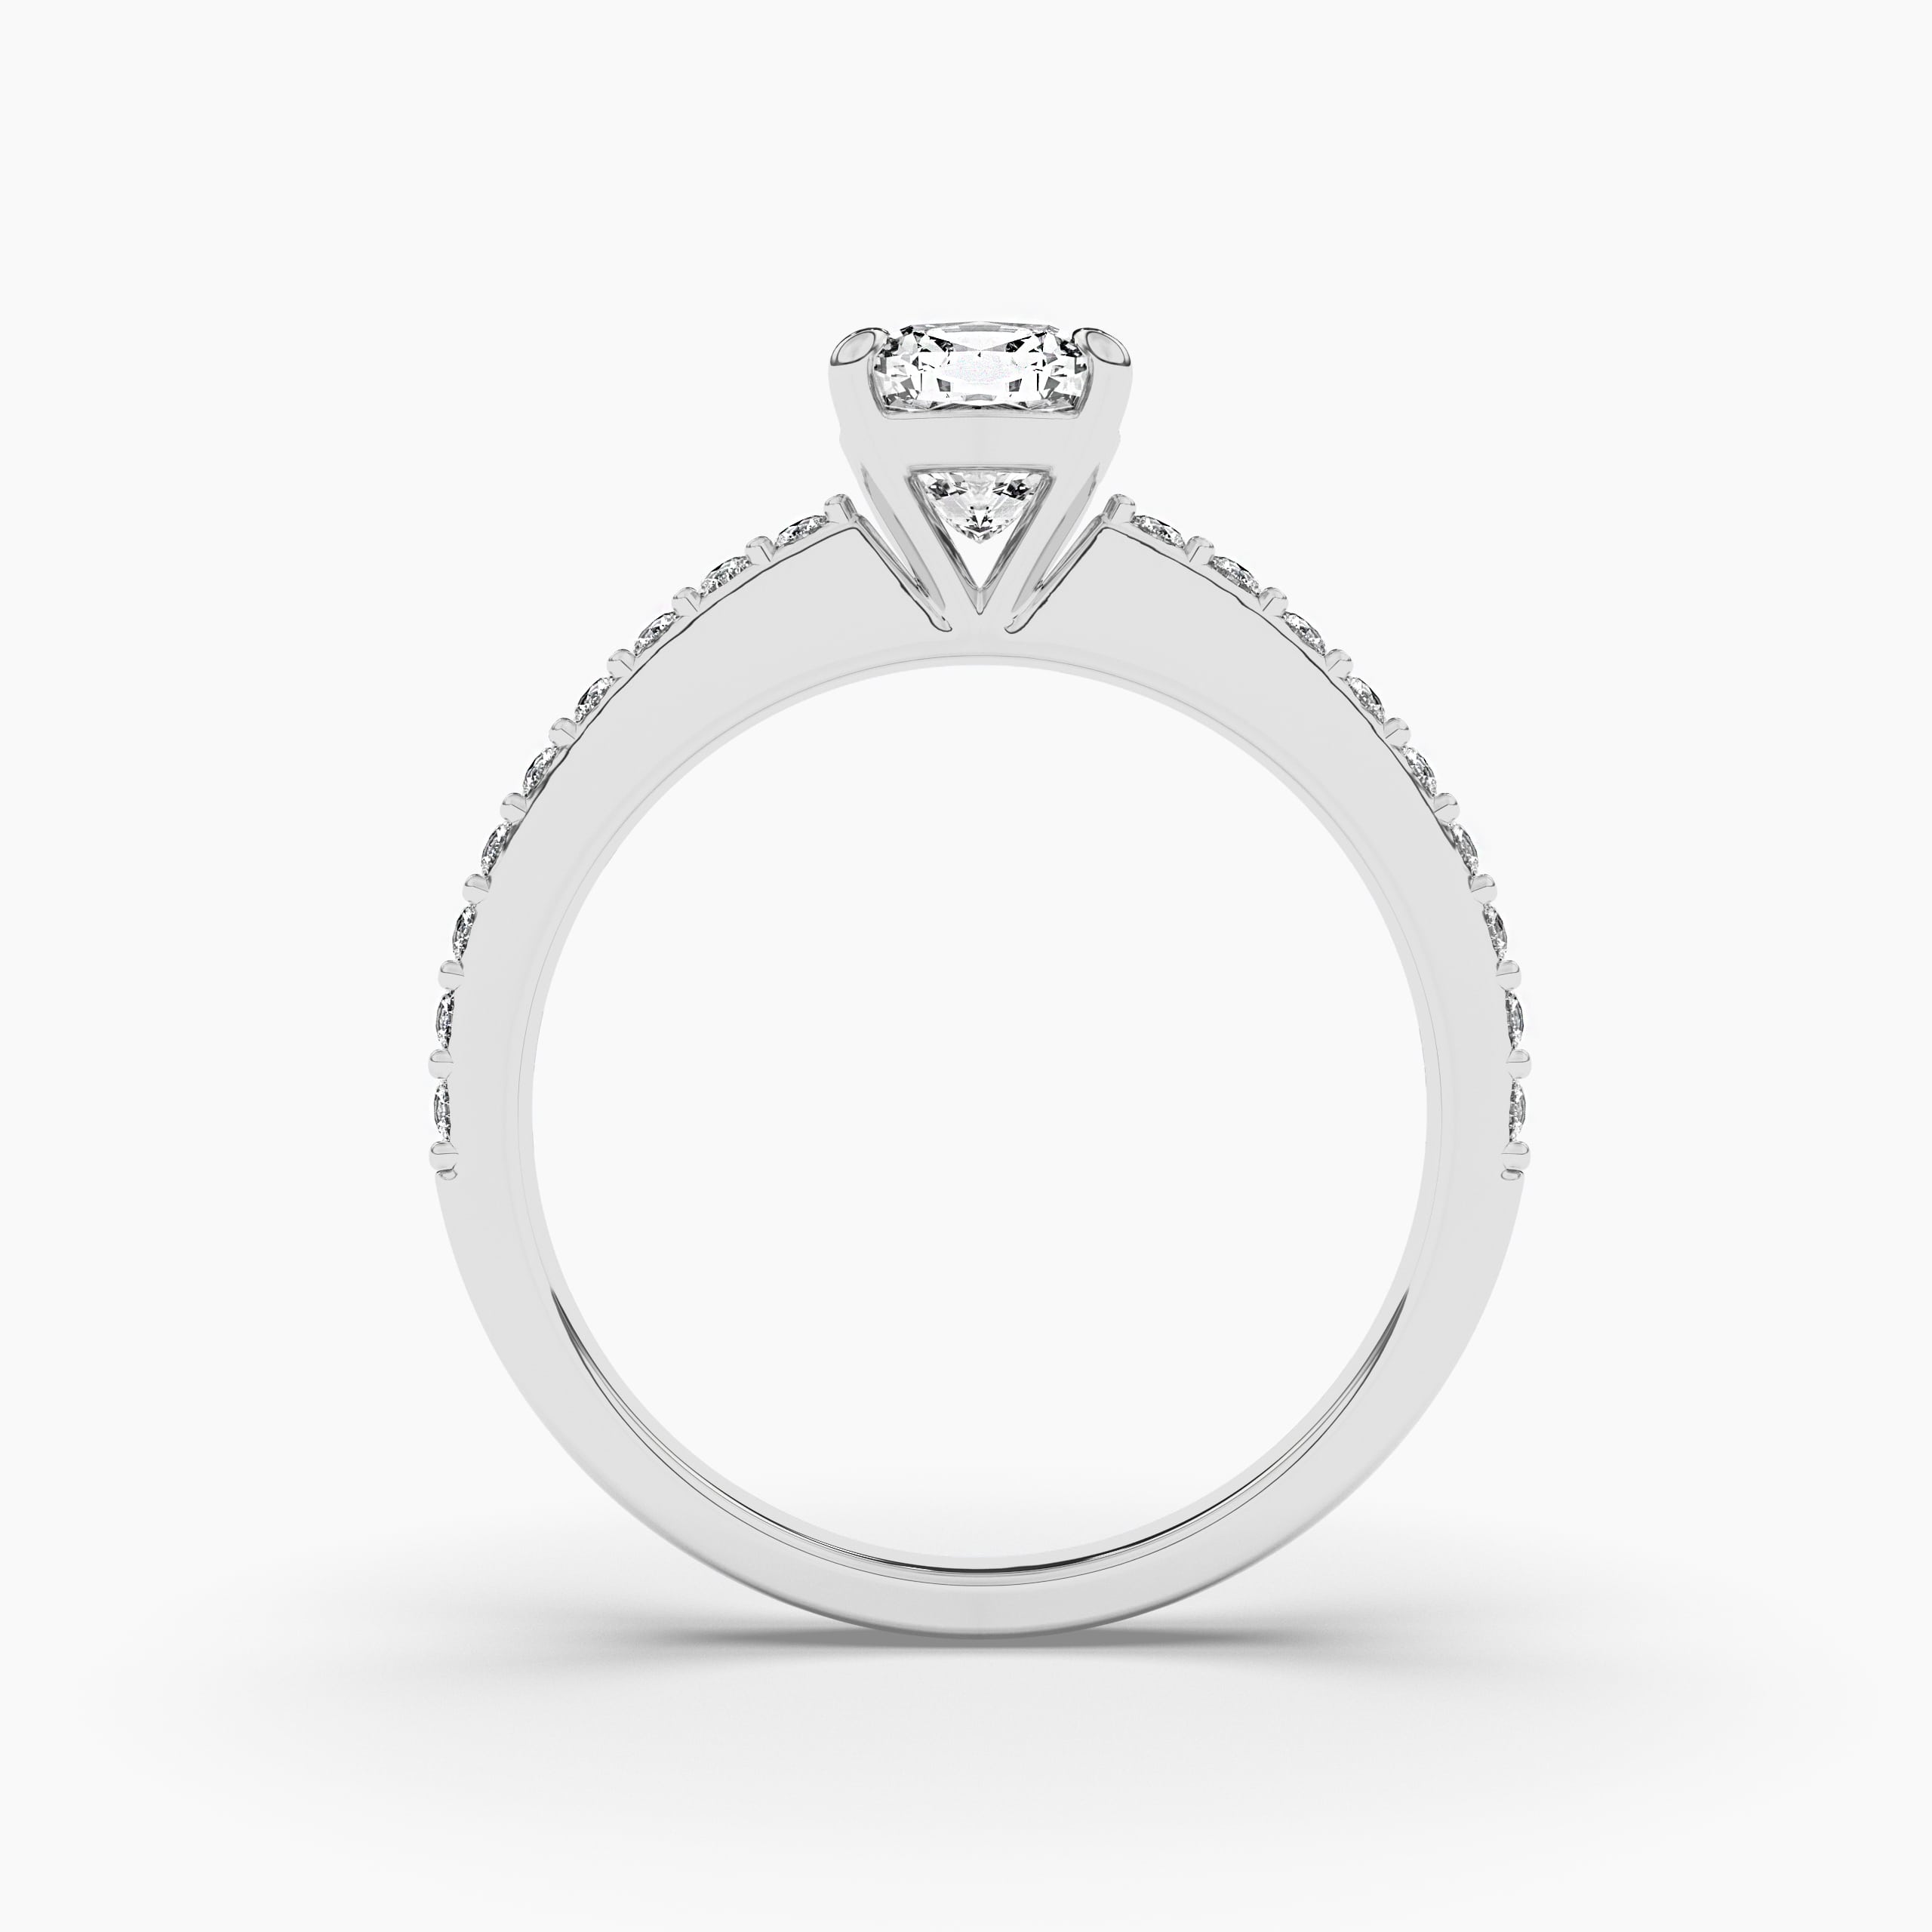 Cushion shape amethyst cut diamond ring in white gold